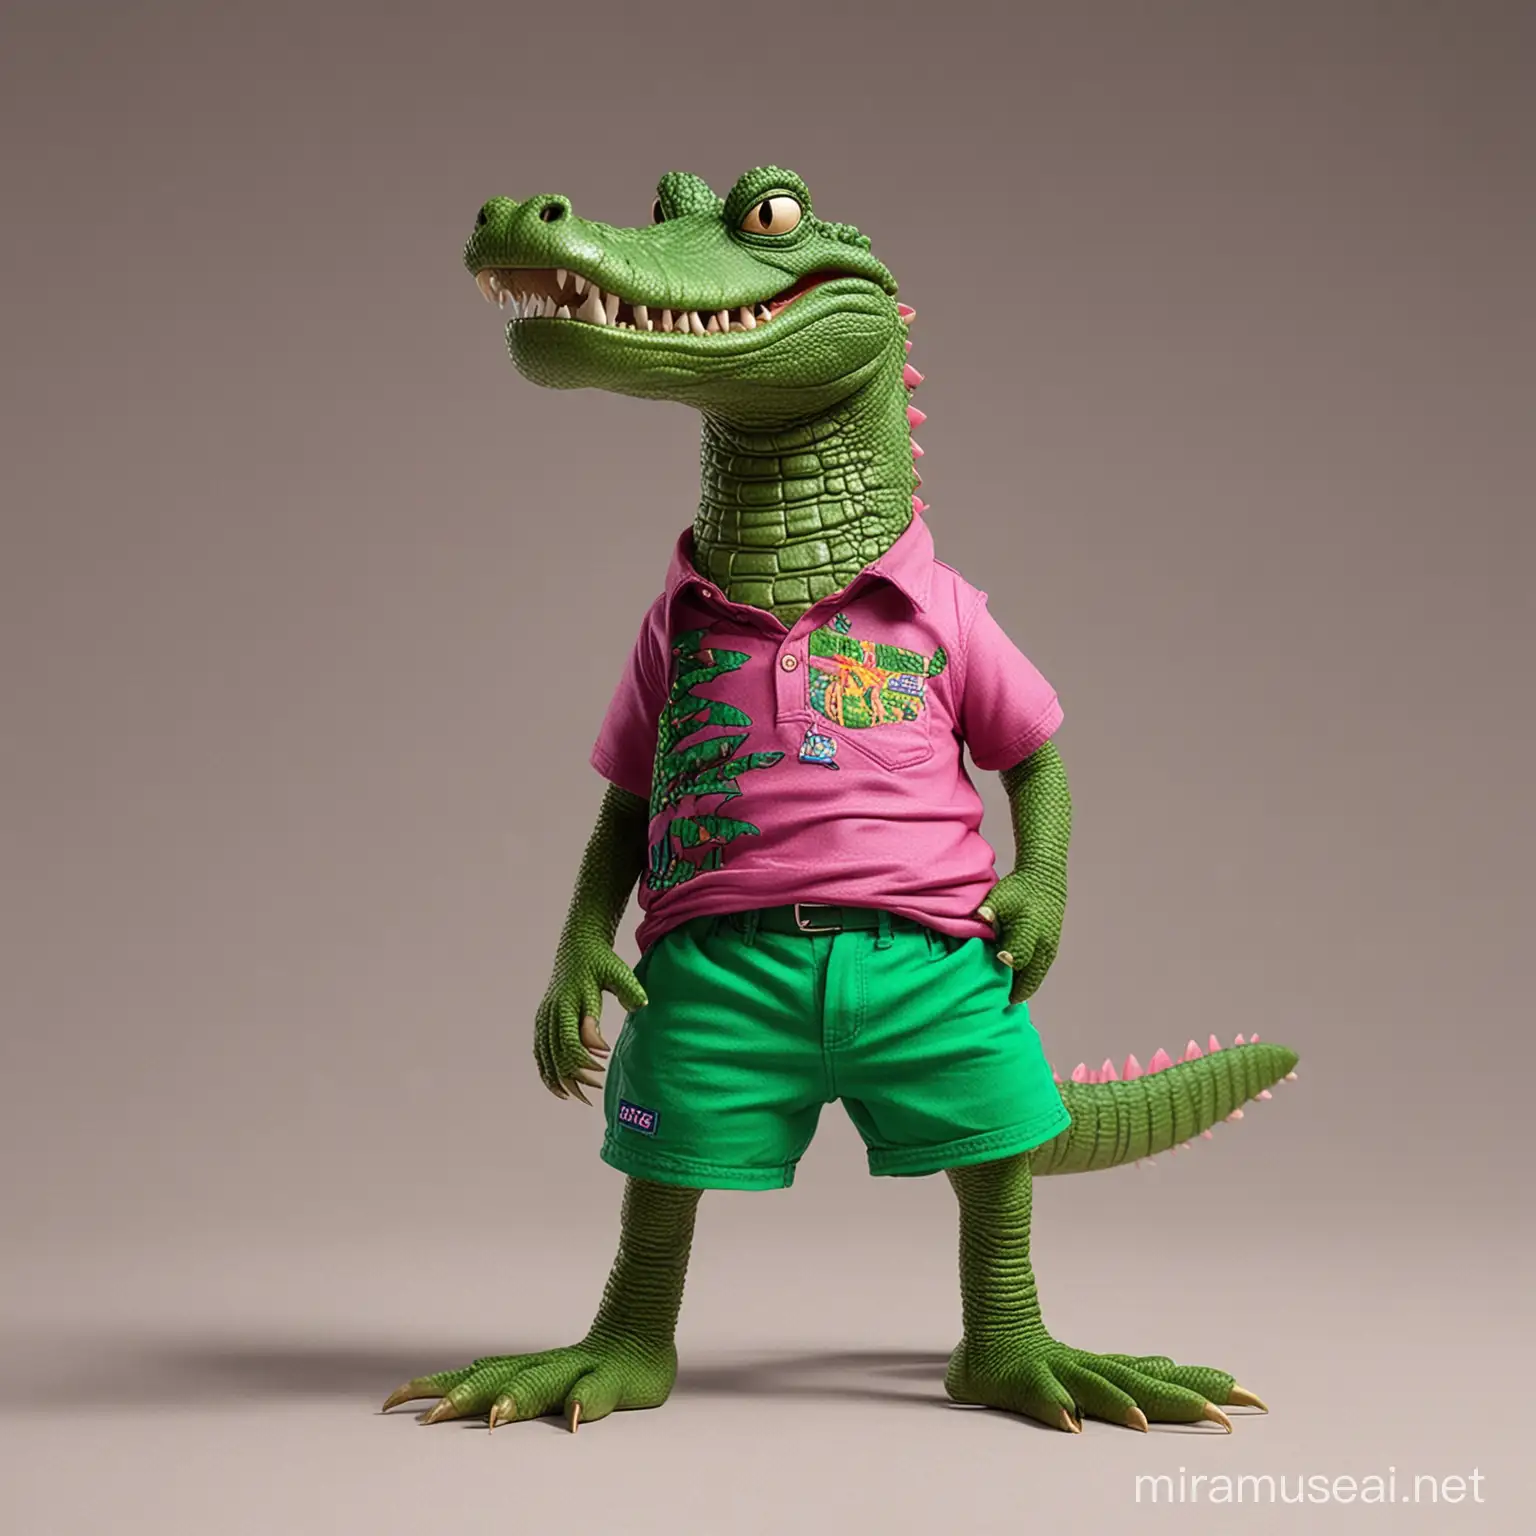 magenta crocodila wearing green shorts